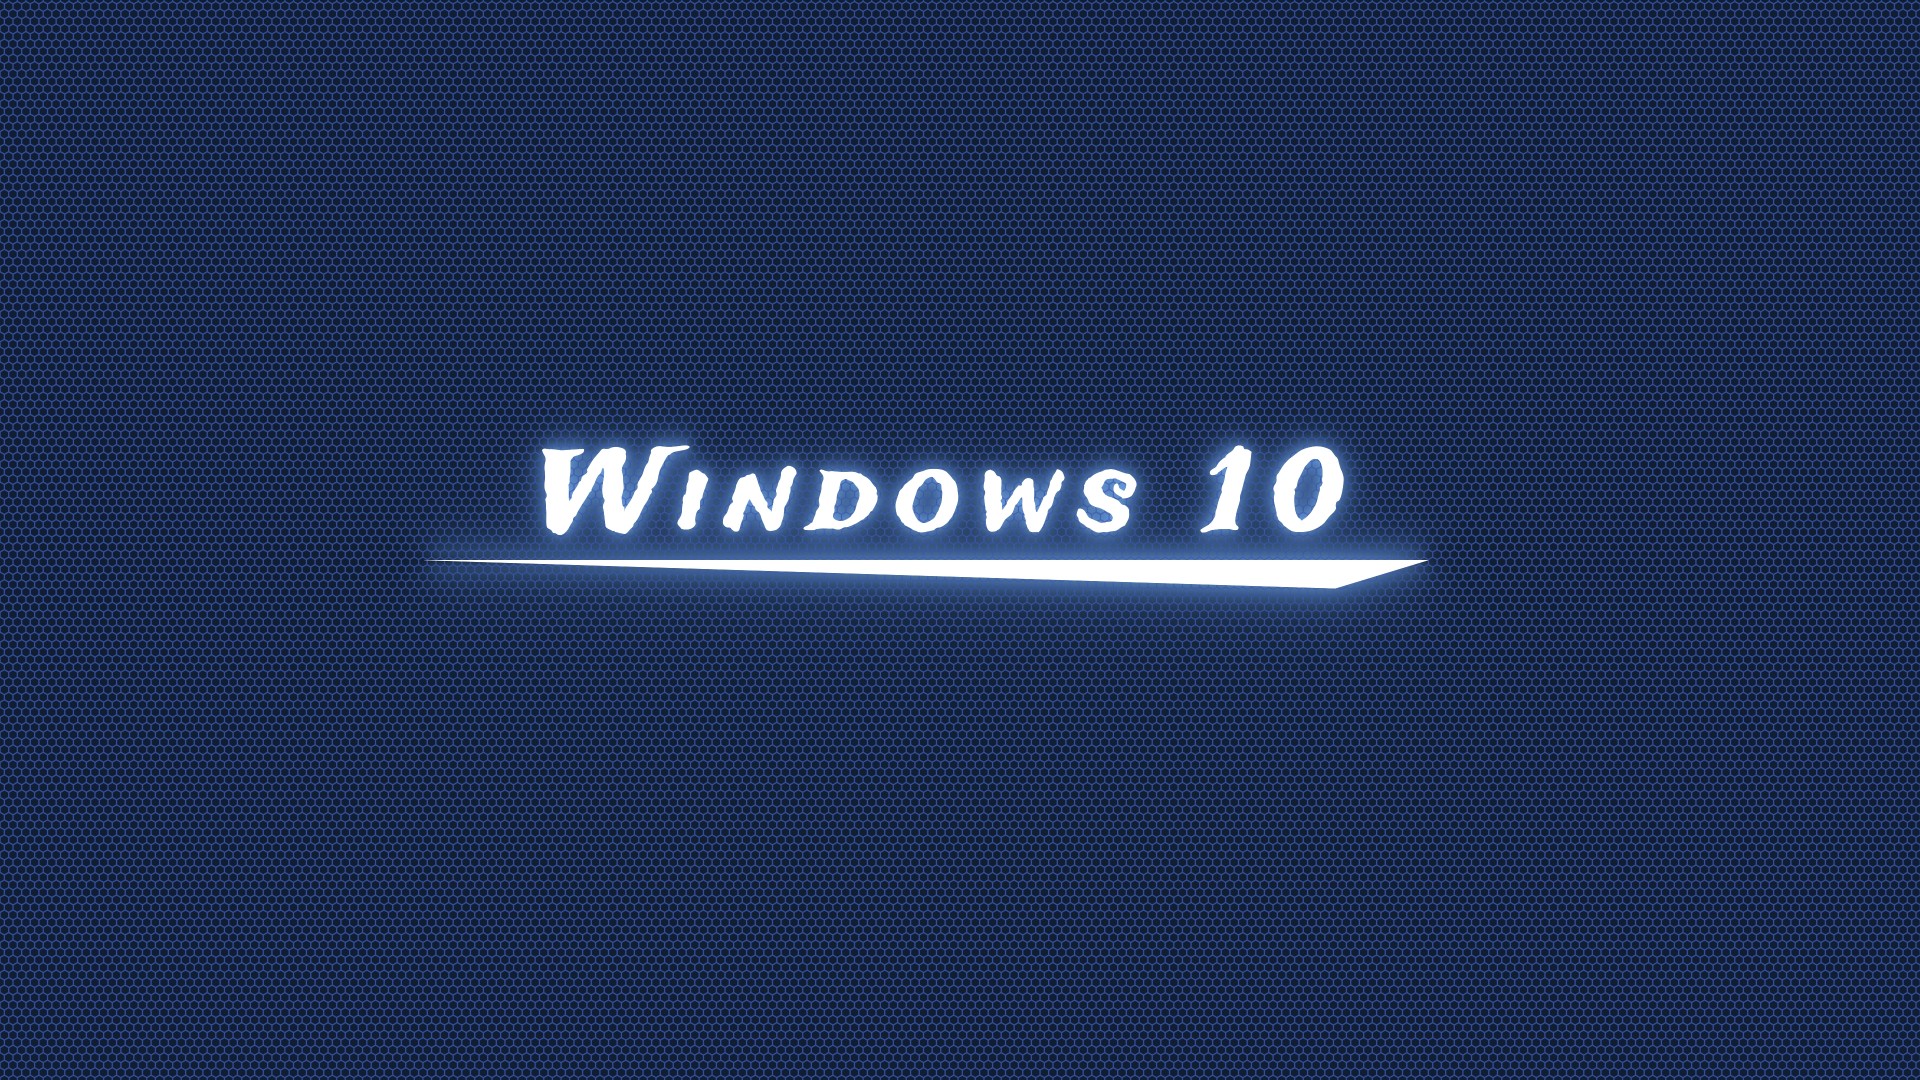 Windows 10 honeycomb wallpaper 1920x1080 (1080p) - Wallpaper ...